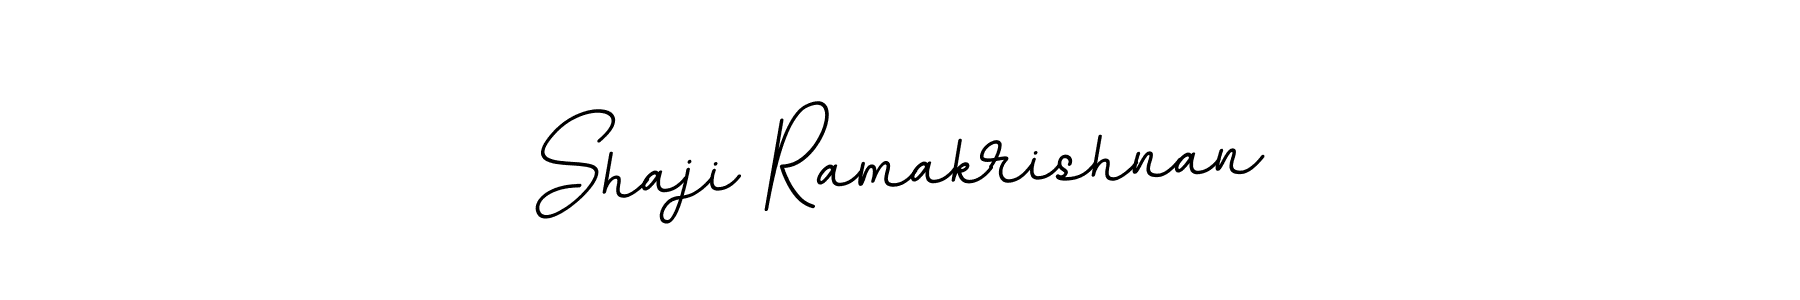 How to Draw Shaji Ramakrishnan signature style? BallpointsItalic-DORy9 is a latest design signature styles for name Shaji Ramakrishnan. Shaji Ramakrishnan signature style 11 images and pictures png